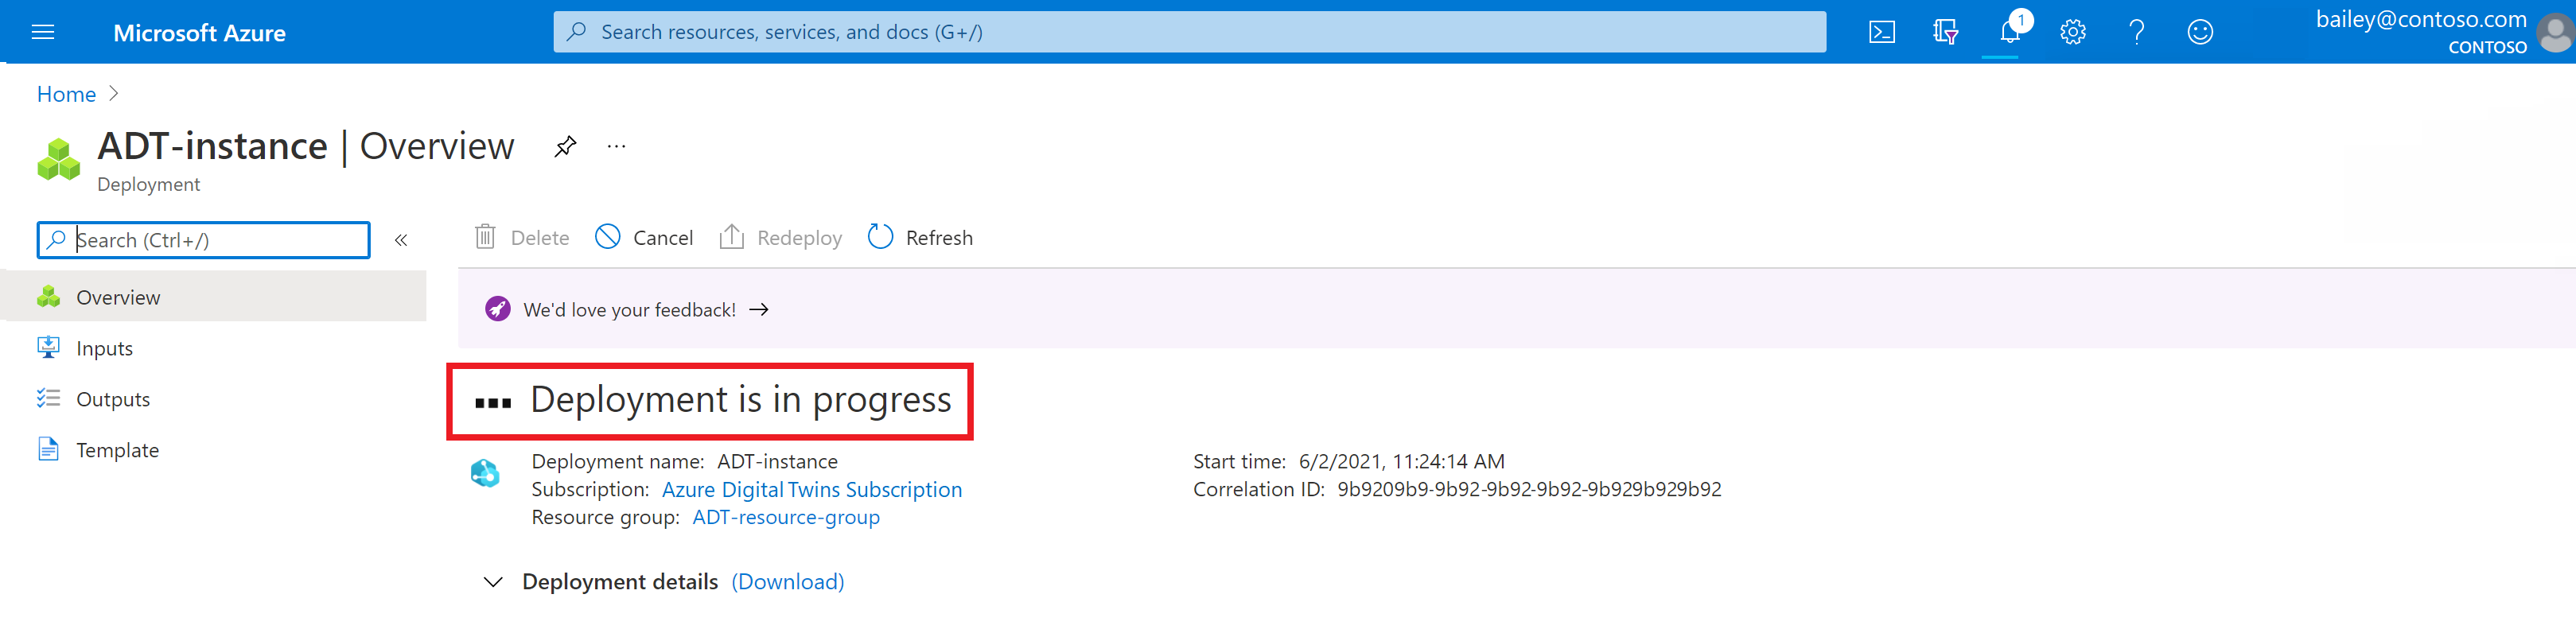 Captura de pantalla de la página de implementación de Azure Digital Twins en Azure Portal. La página indica que la implementación está en progreso.